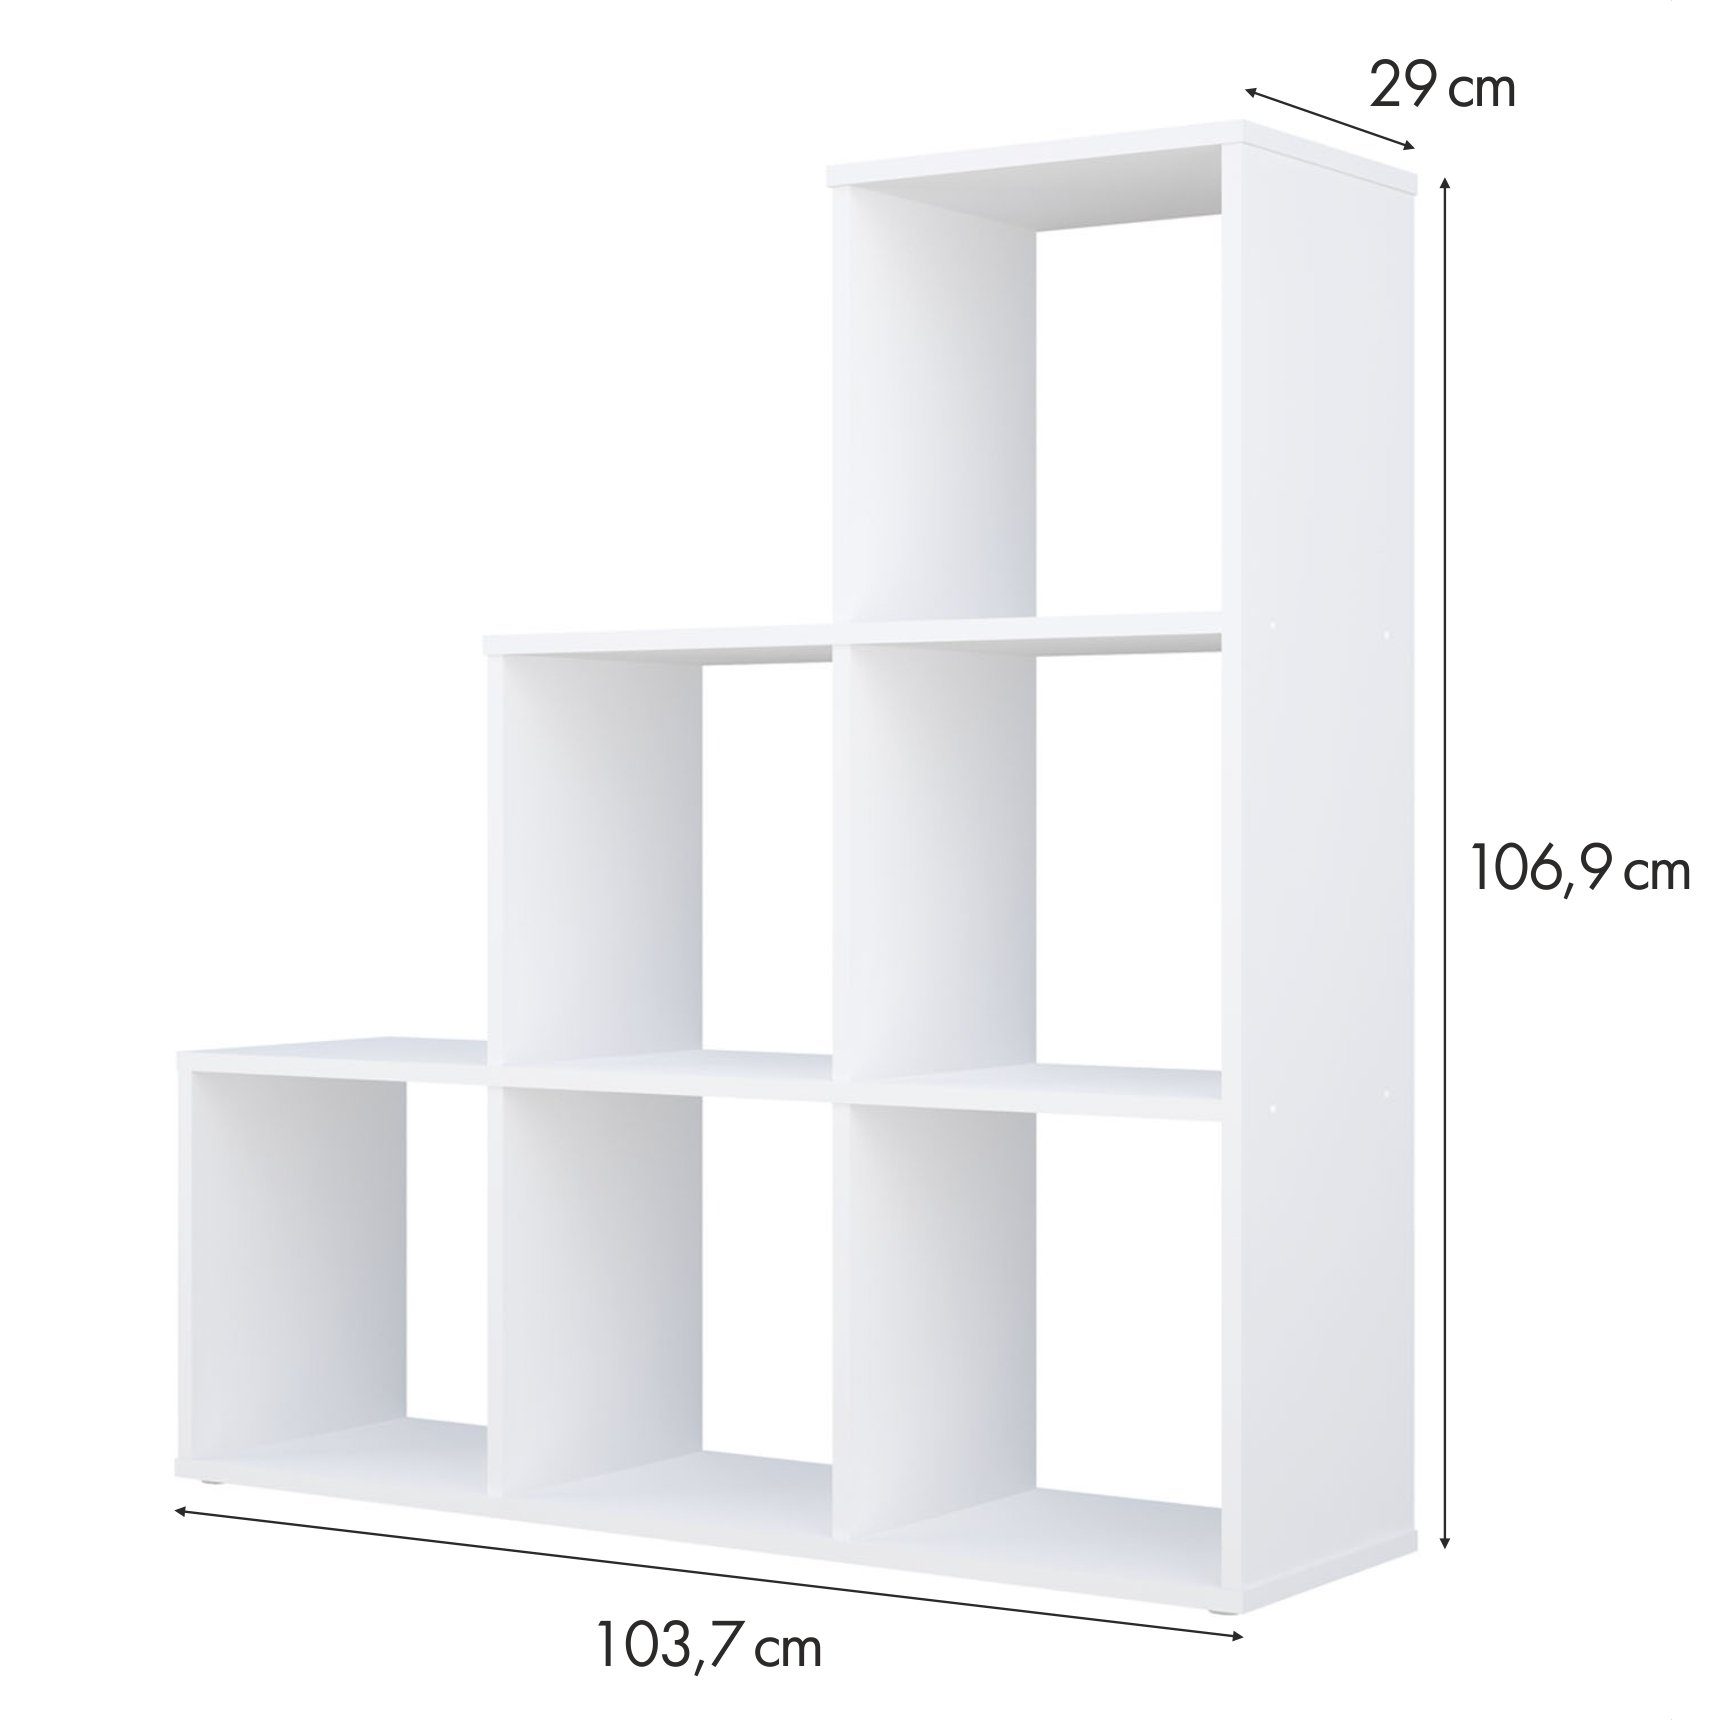 Polini Home Raumteilerregal Treppenregal weiß weiß 6 | Fächer Regal Raumteiler Stufenregal 107x104x29c weiß